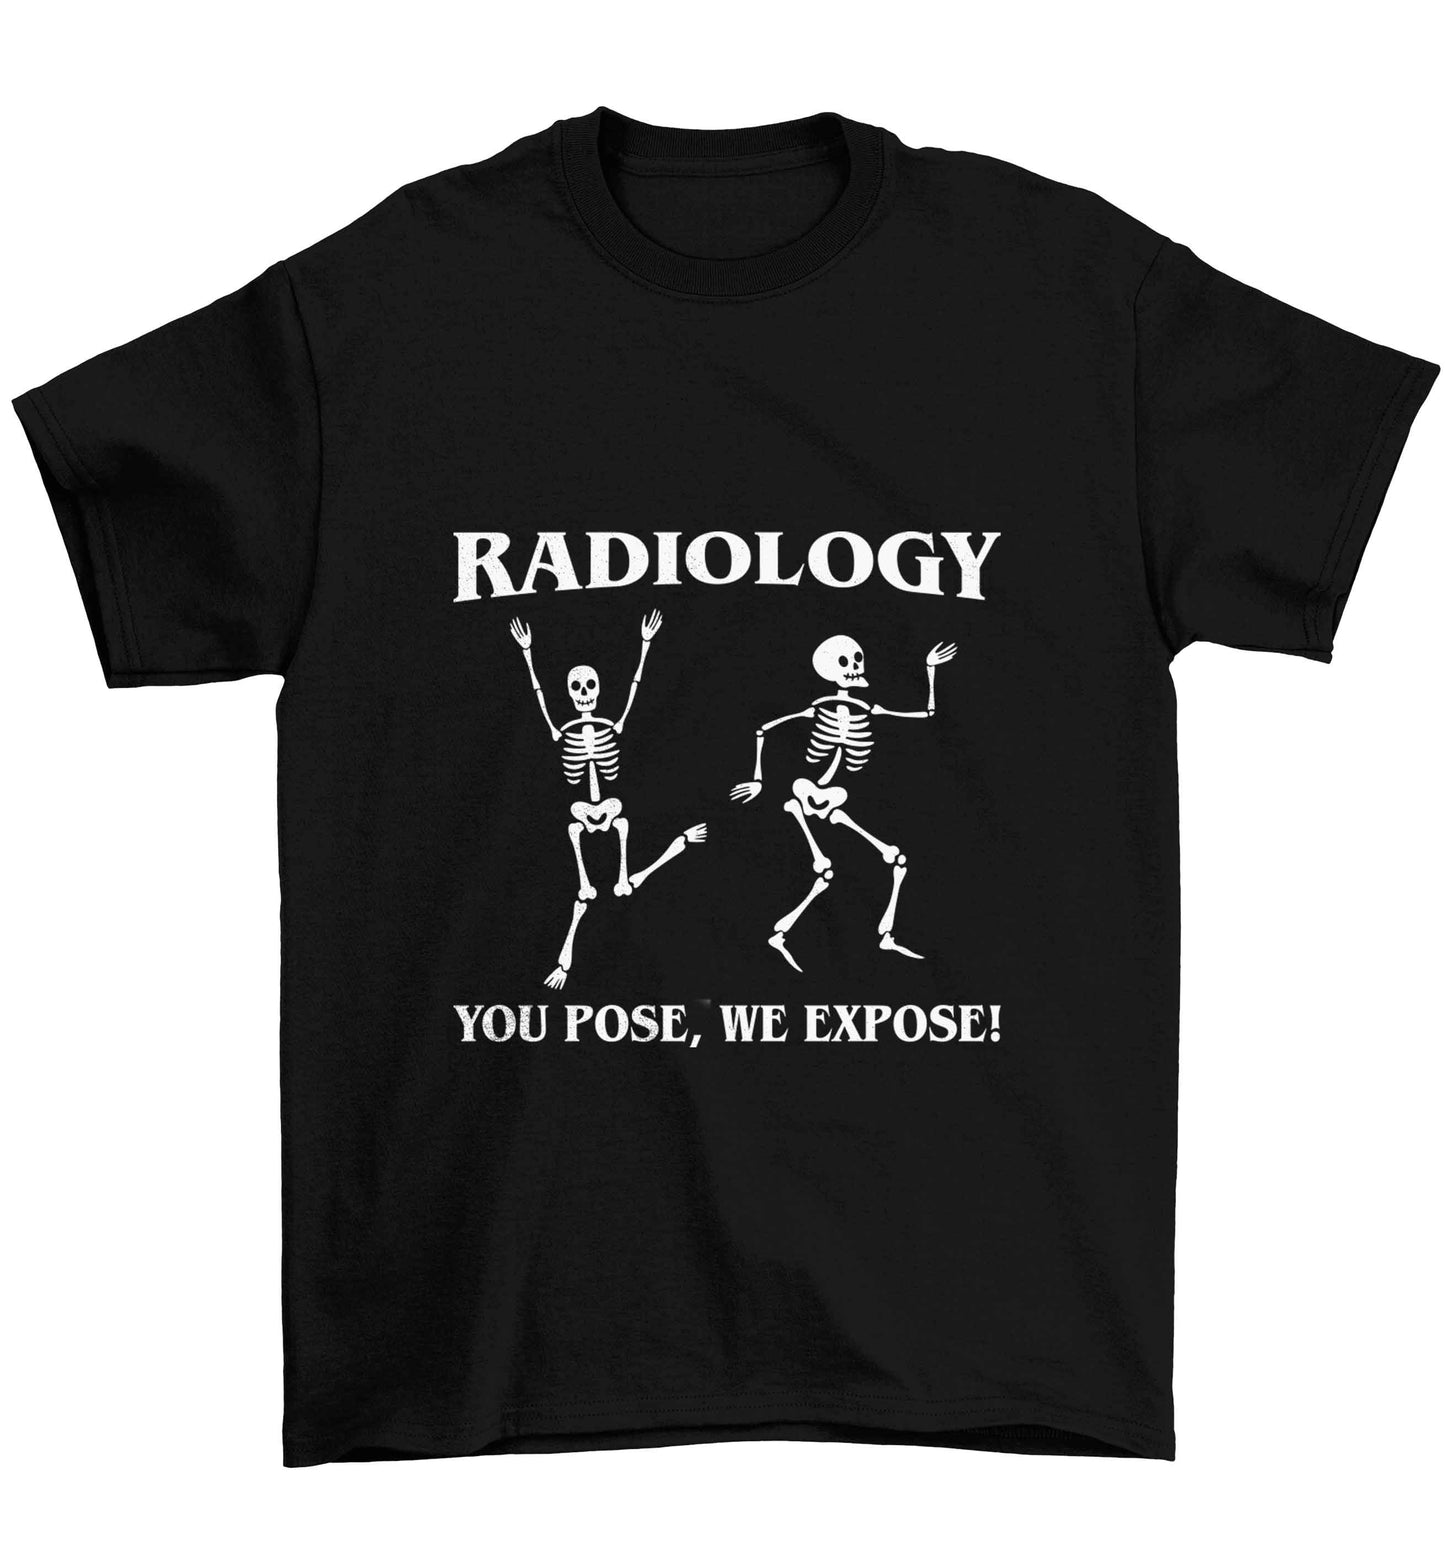 Radiology you pose we expose Children's black Tshirt 12-13 Years